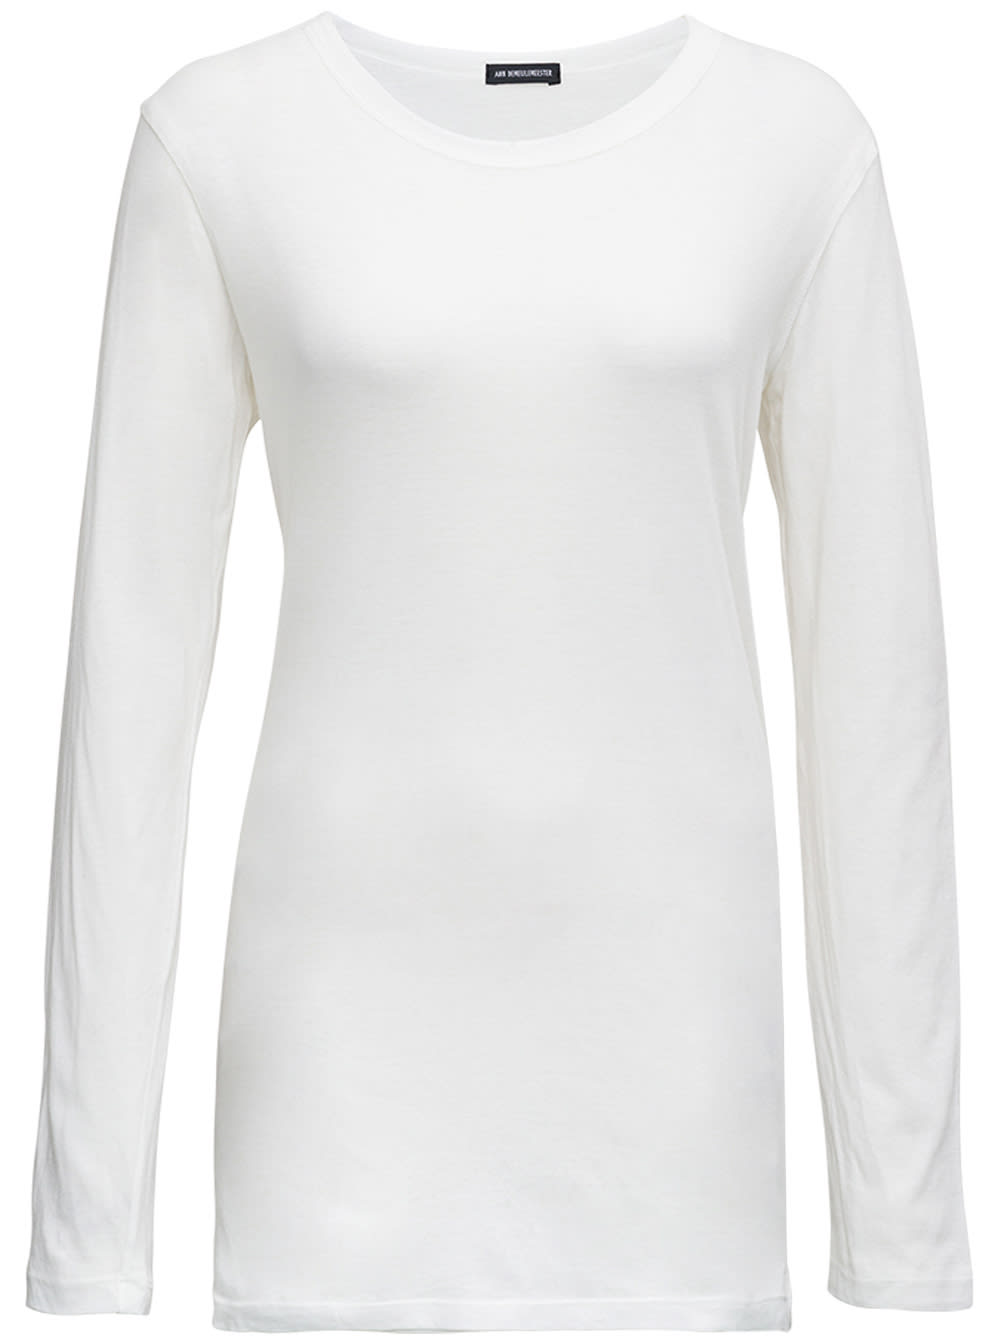 Denise White Cotton Long Sleeve T-shirt